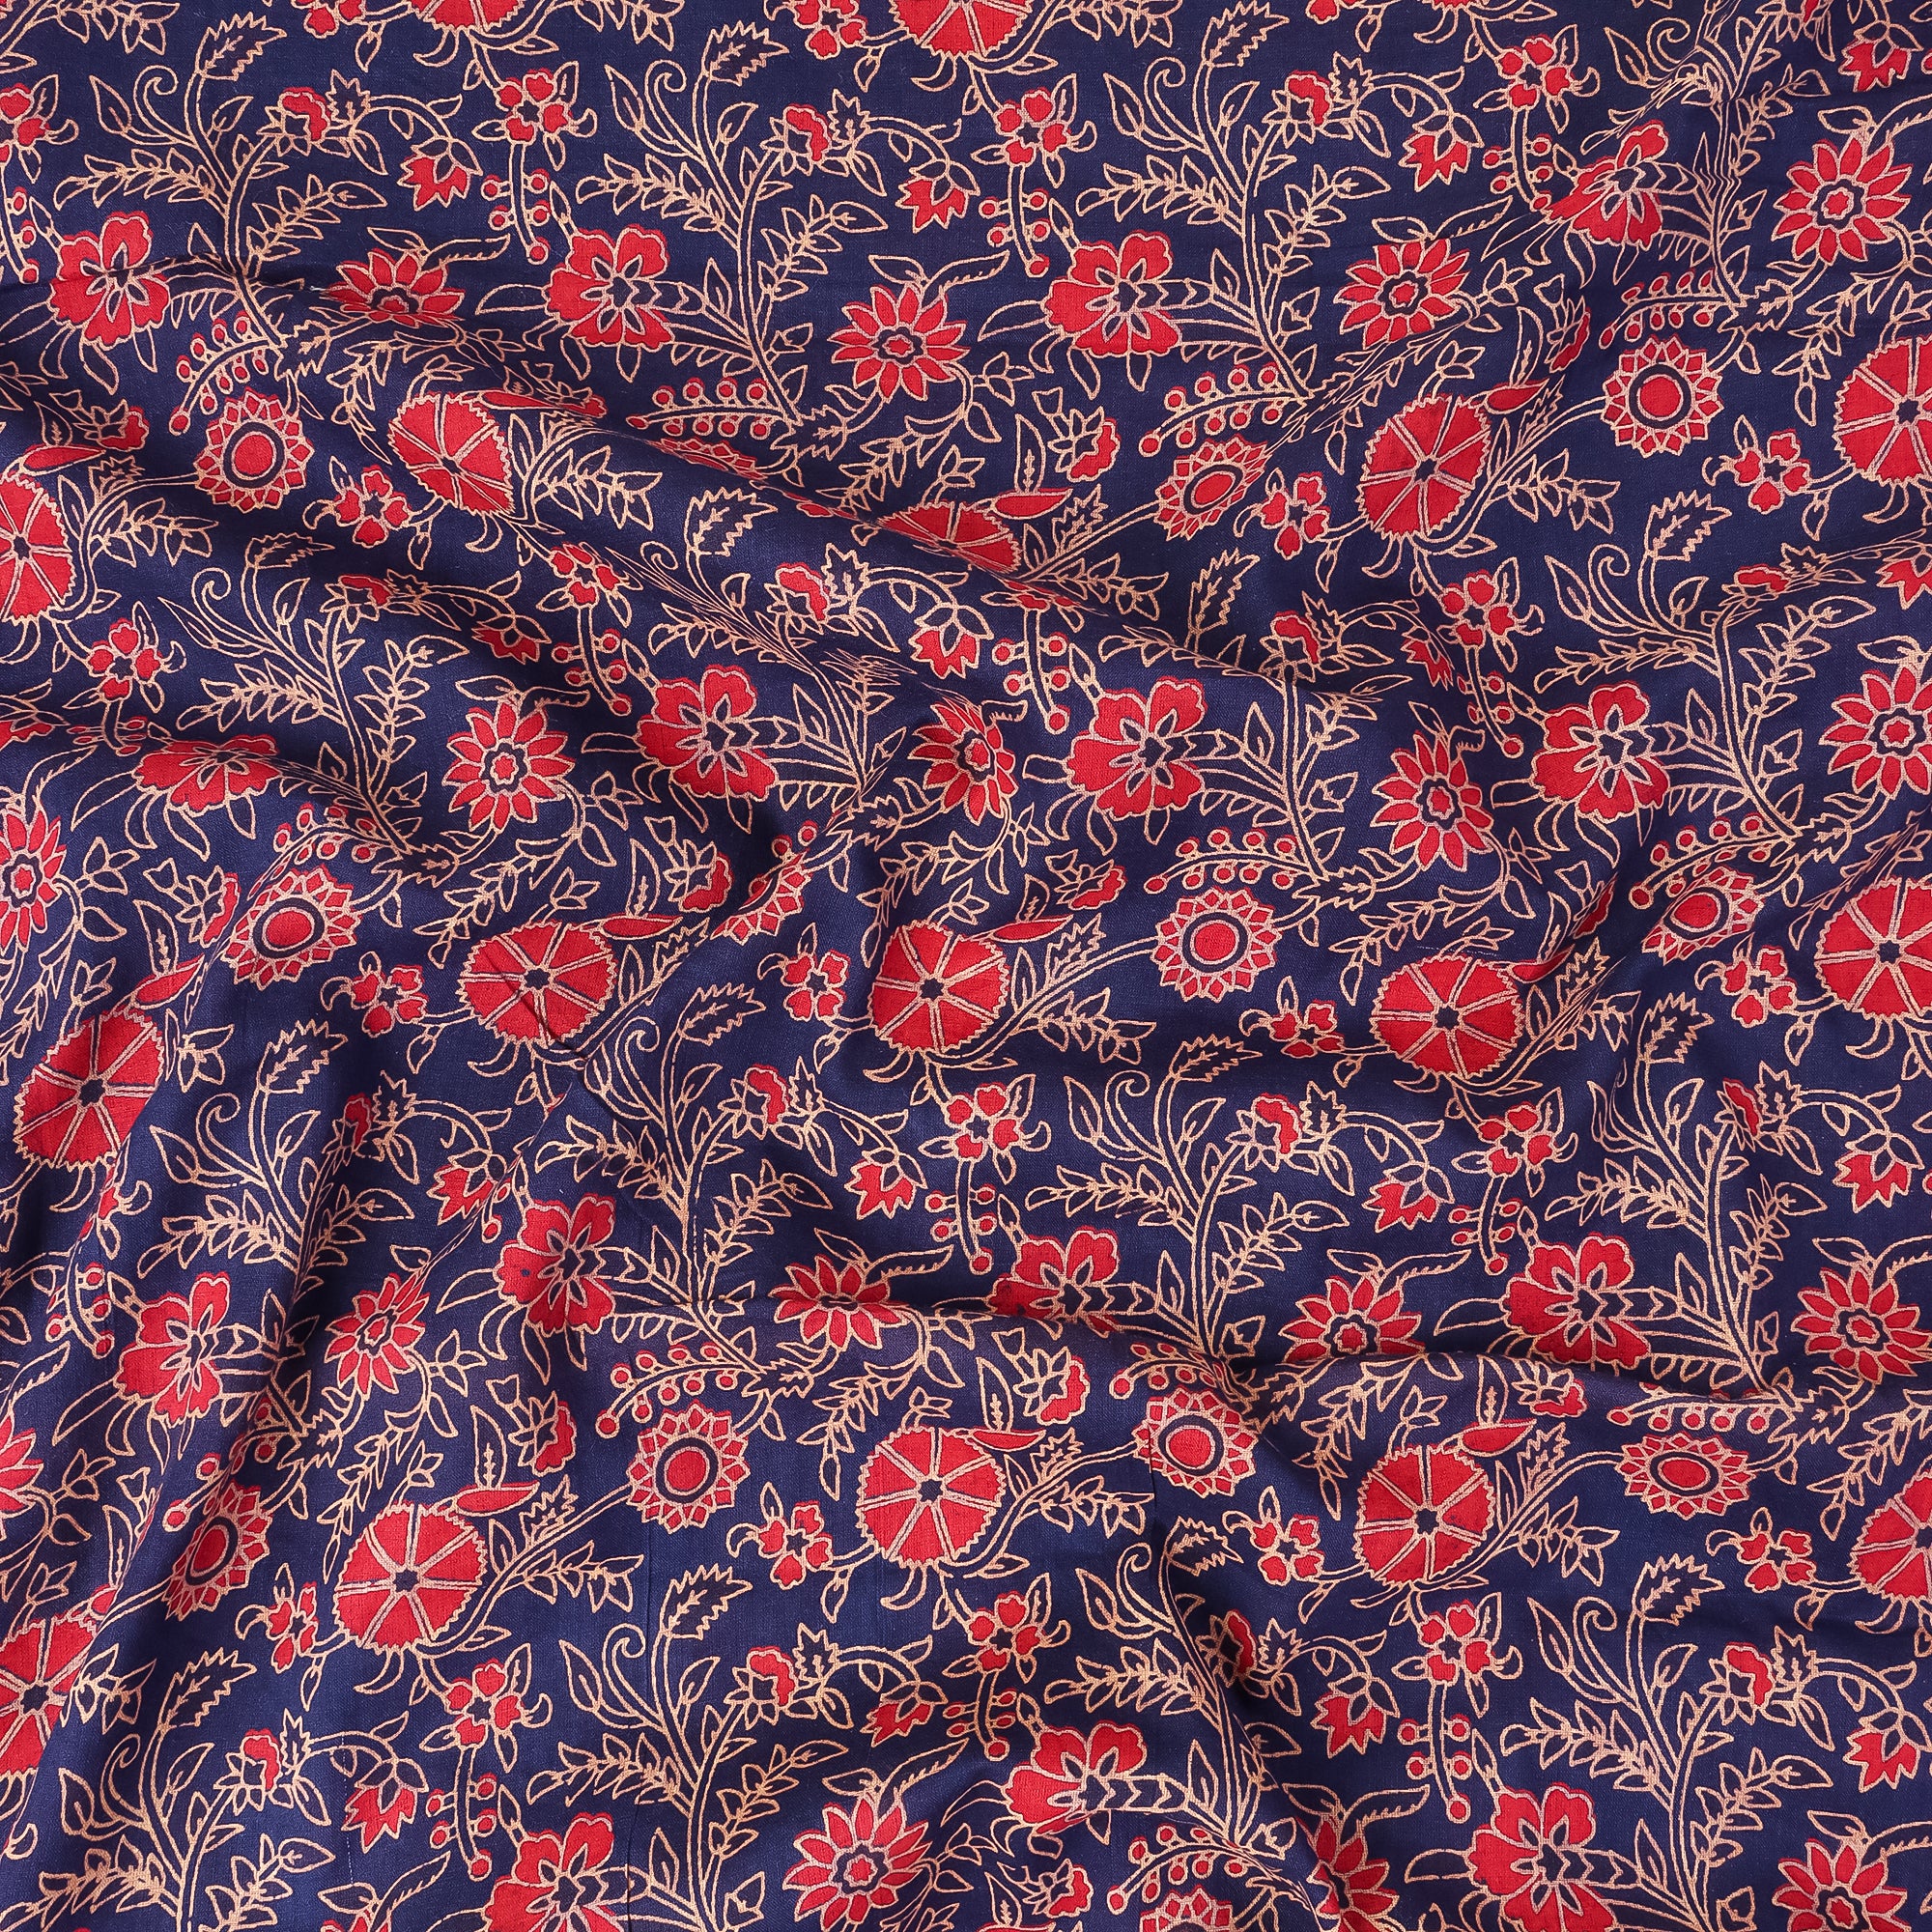 Pink Floral Ajrak Print Fabric Material